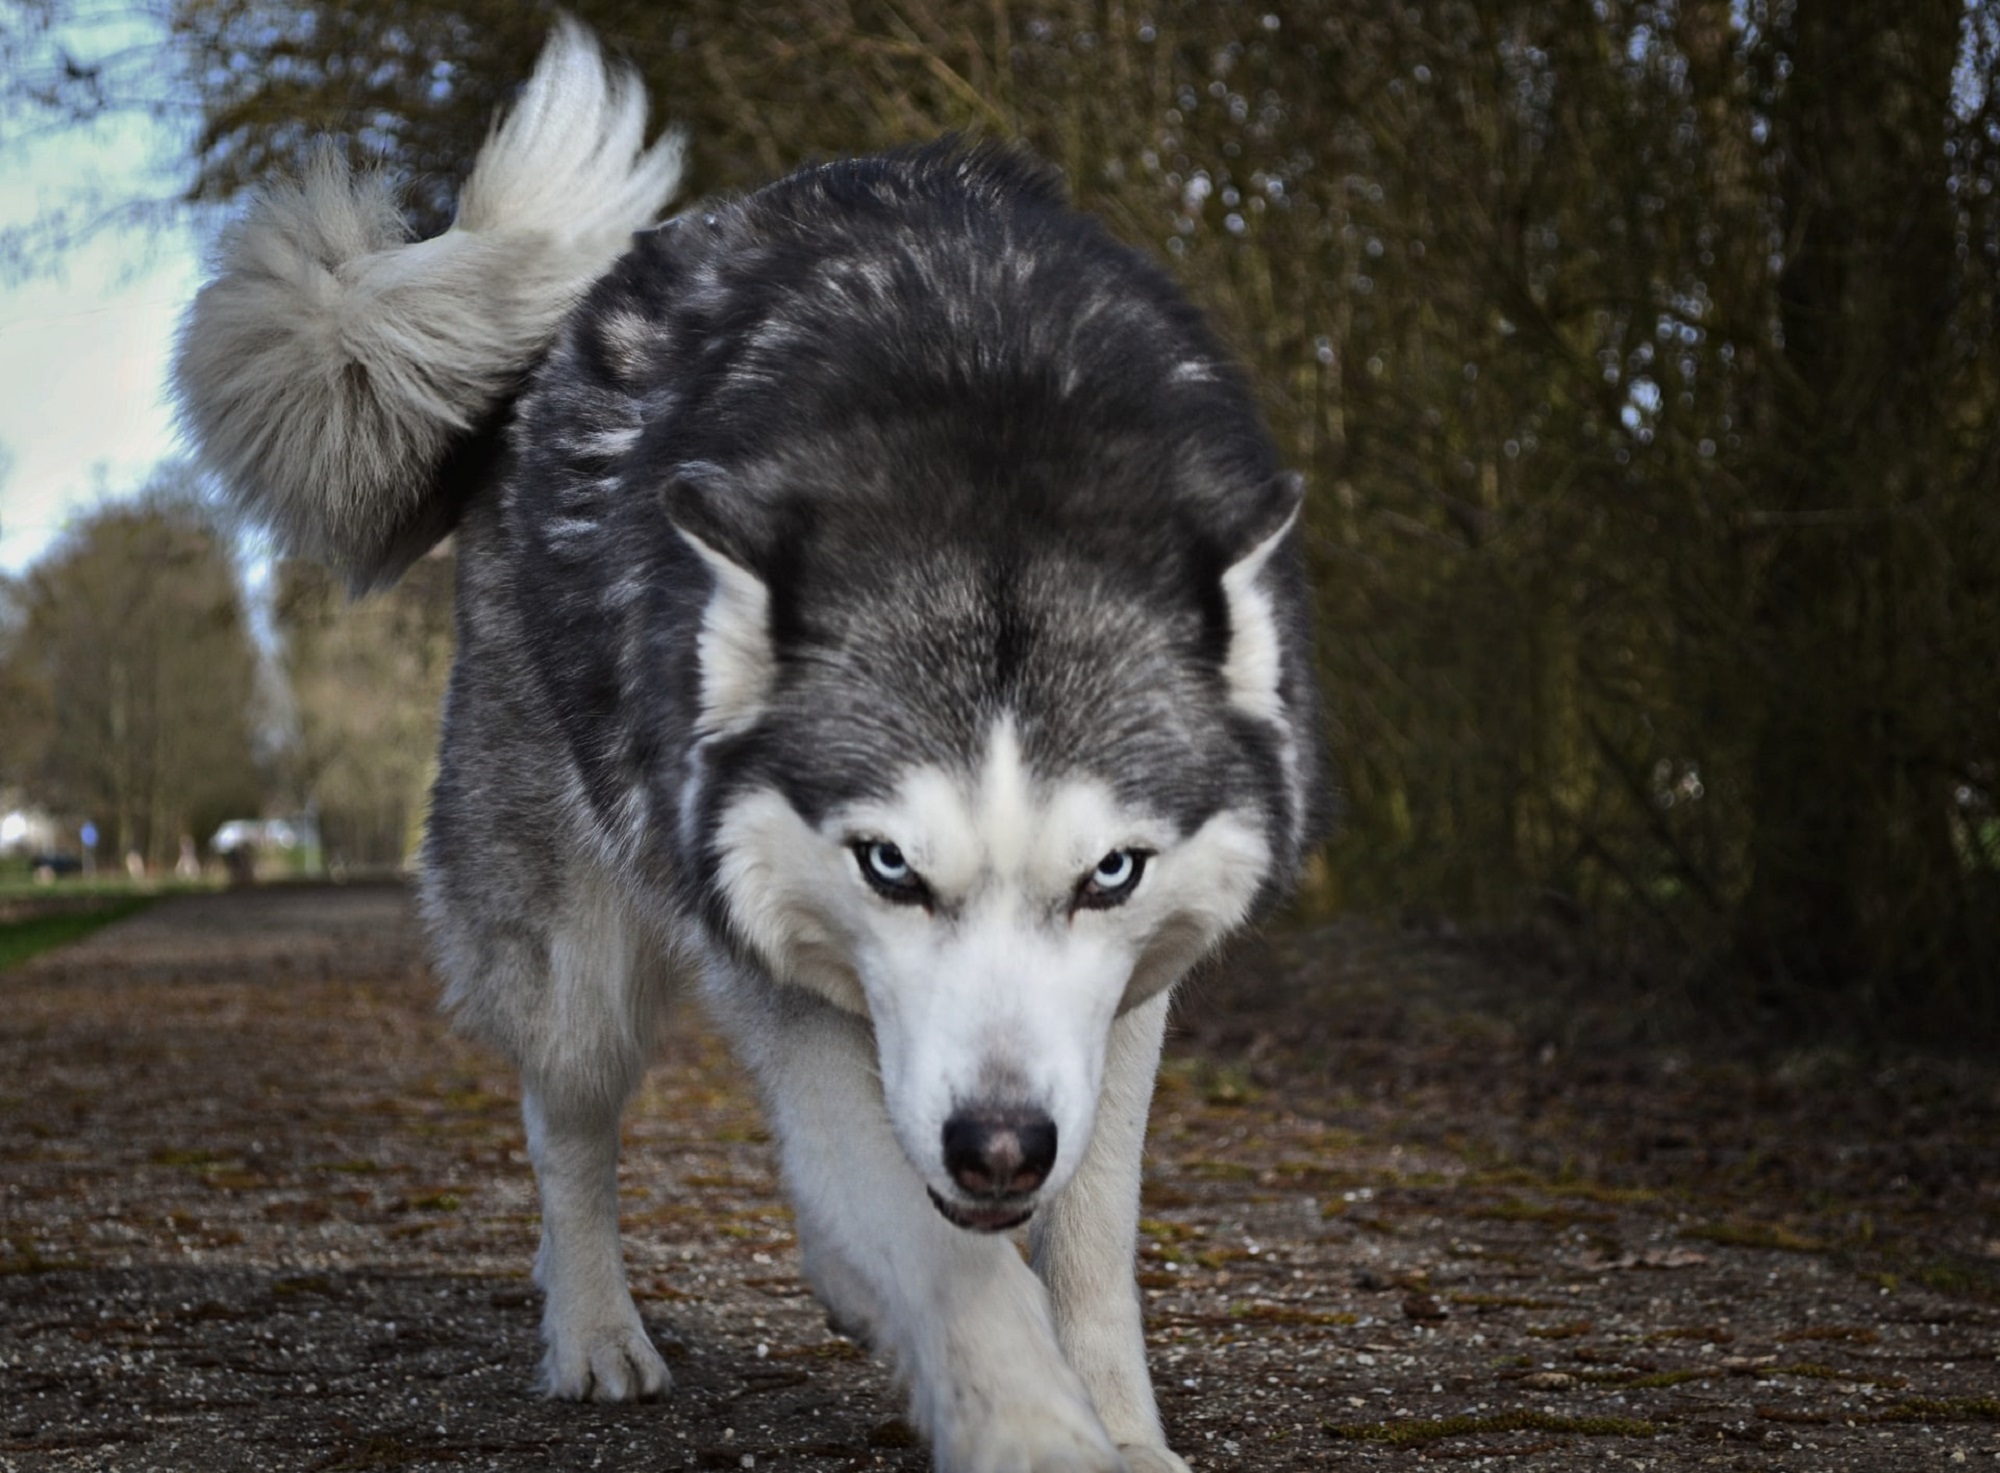 One big myth: dog breeds have personality traits